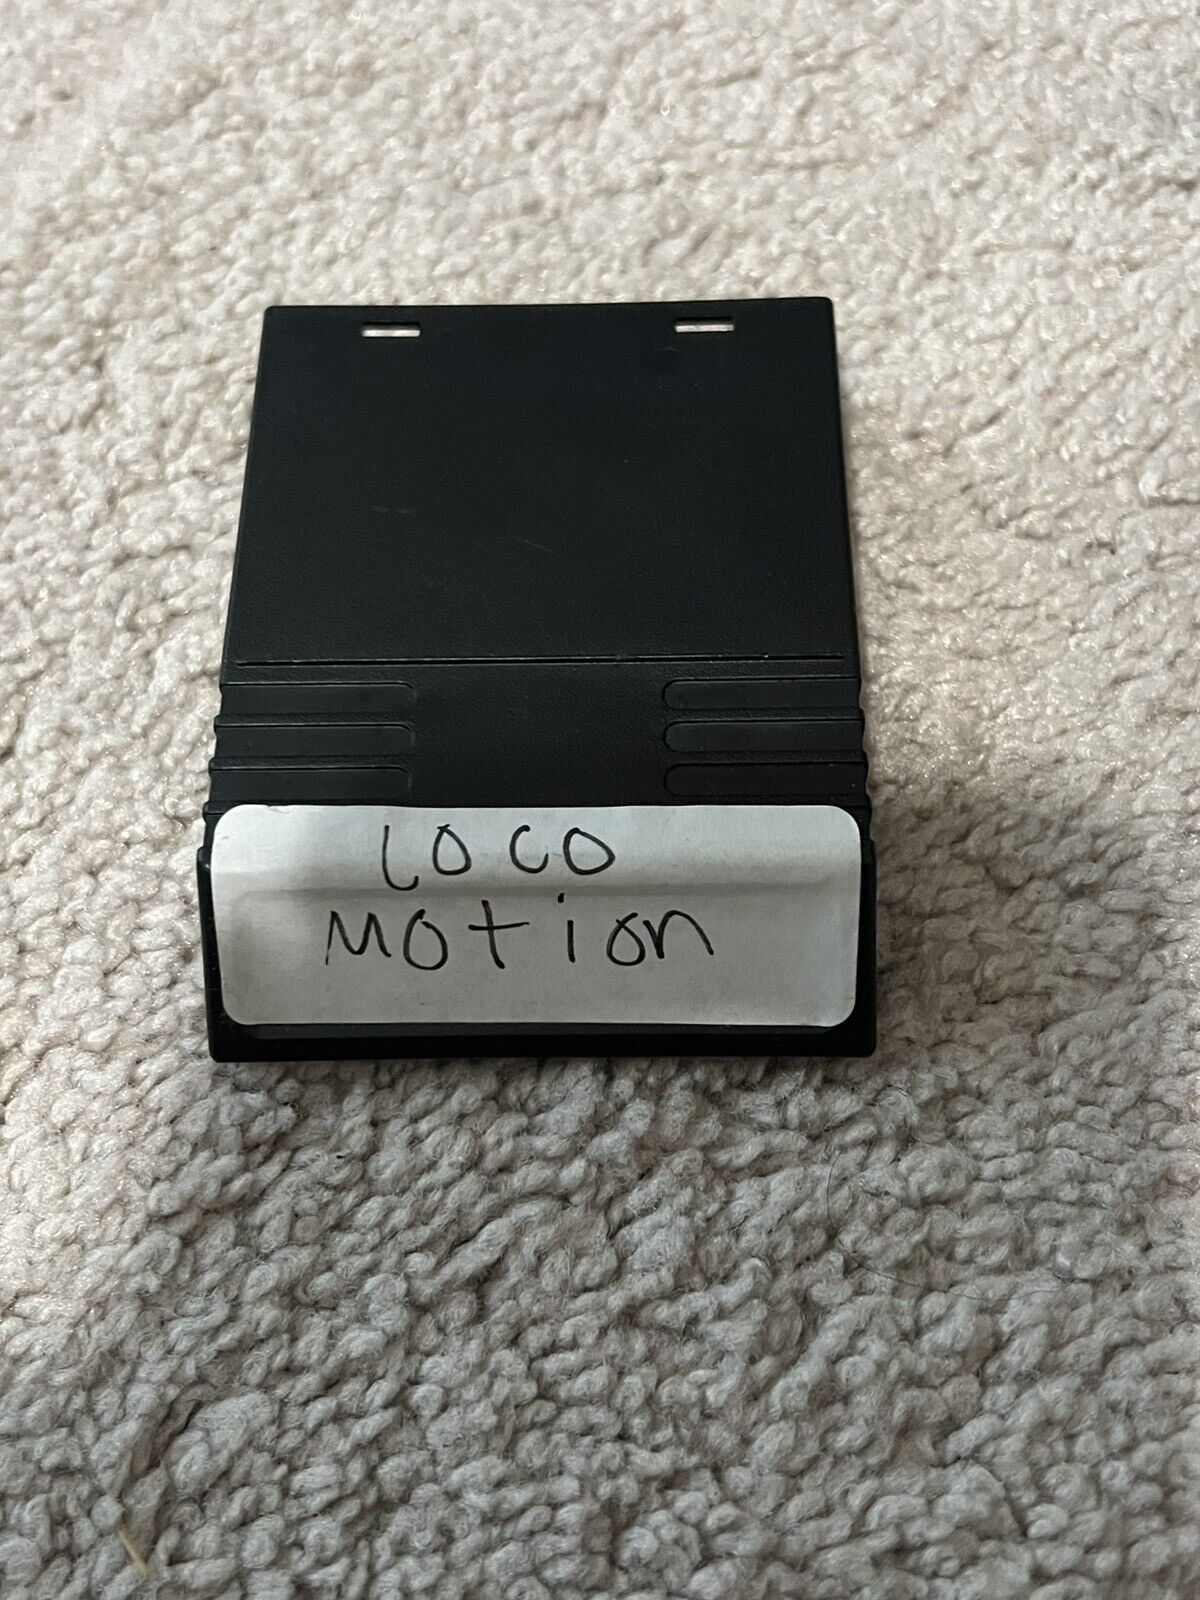 Loco-Motion (Intellivision, 1981) Game Cart